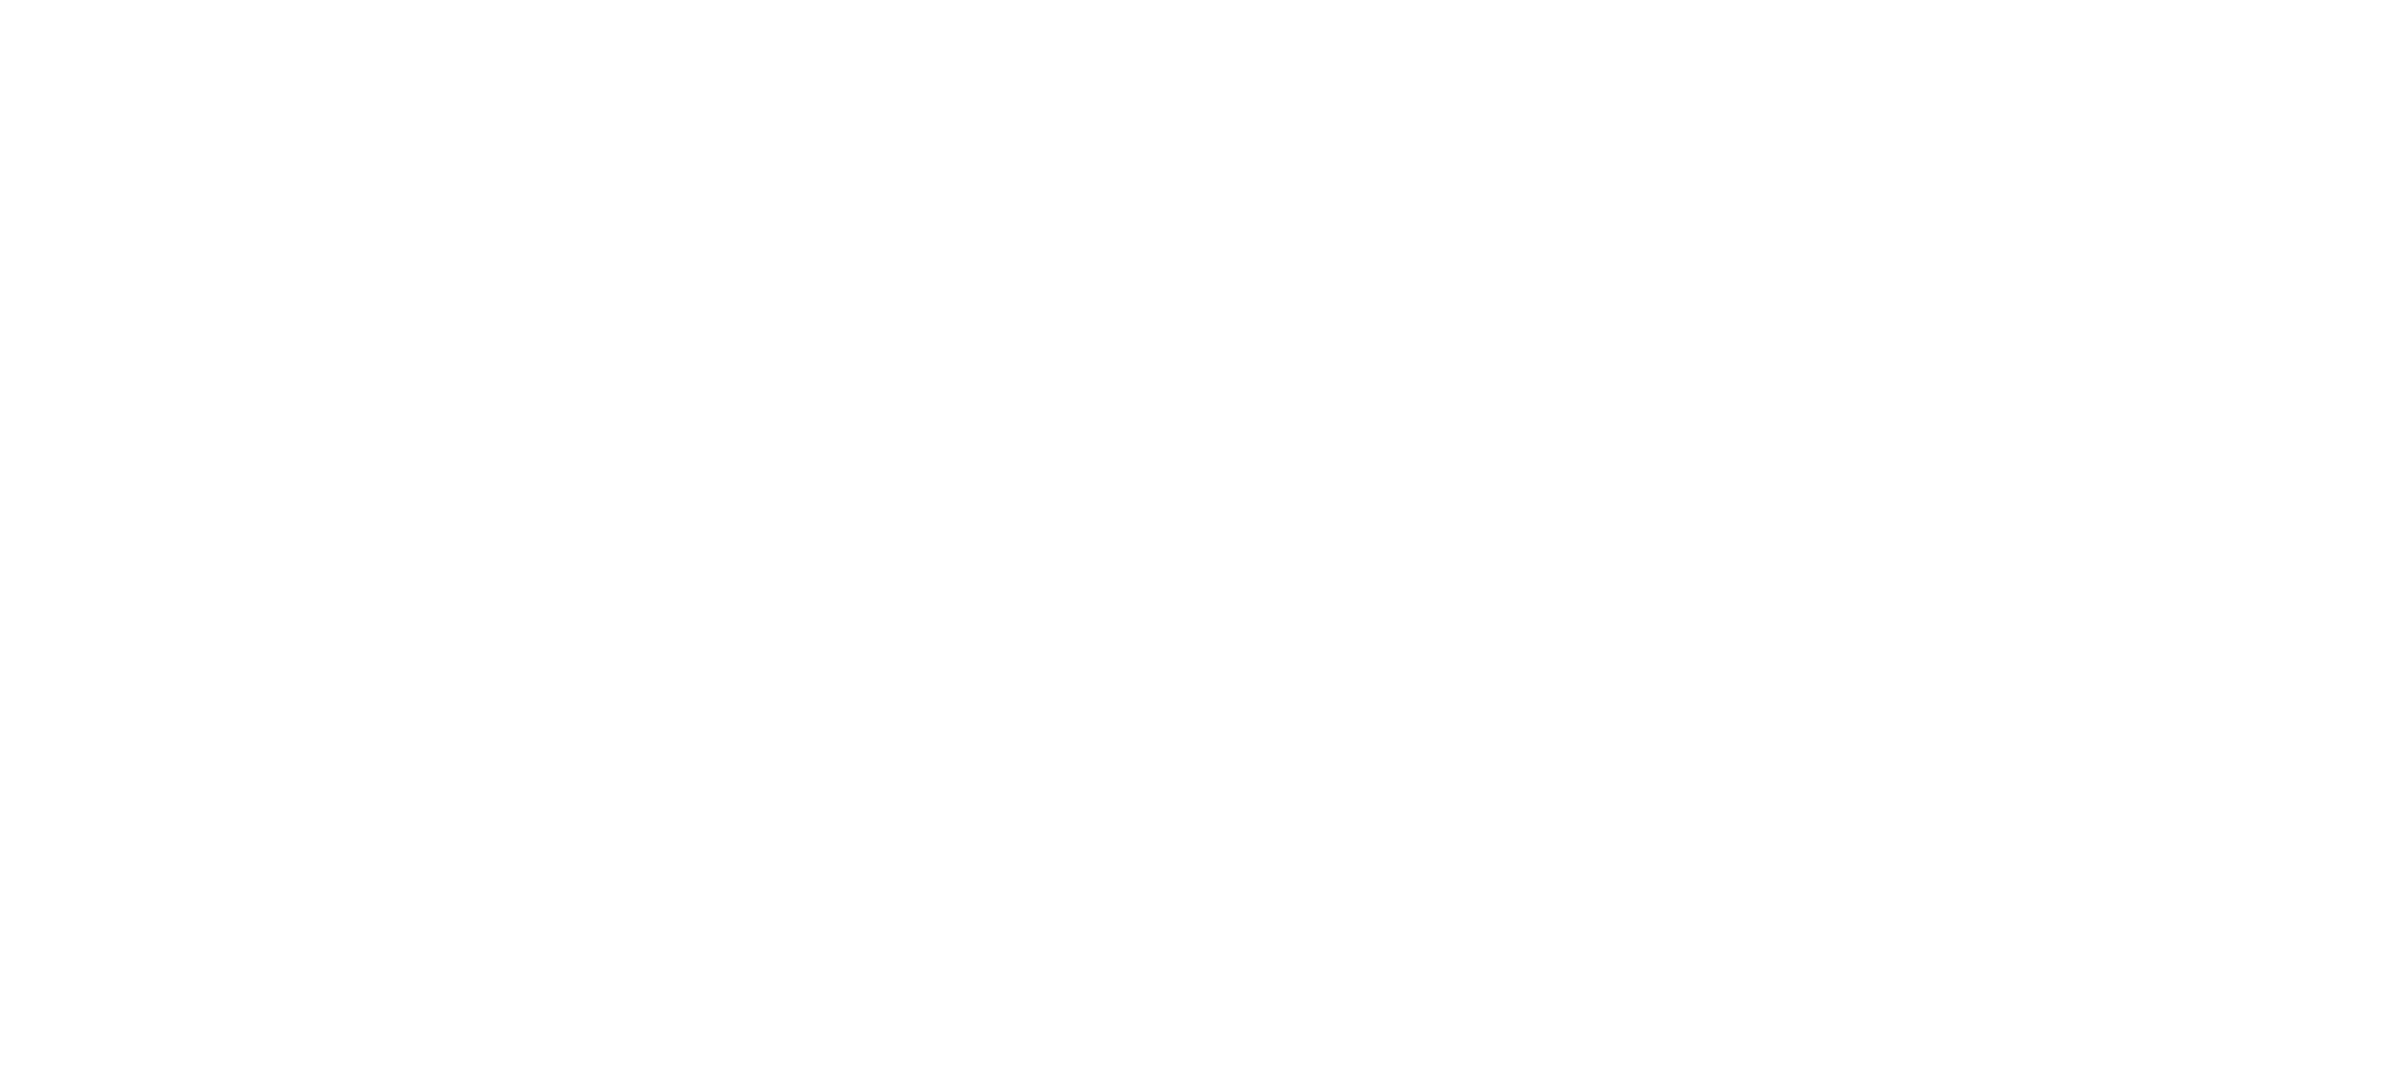 ENHANCED LIFESTYLES FOR METABOLIC SYNDROME